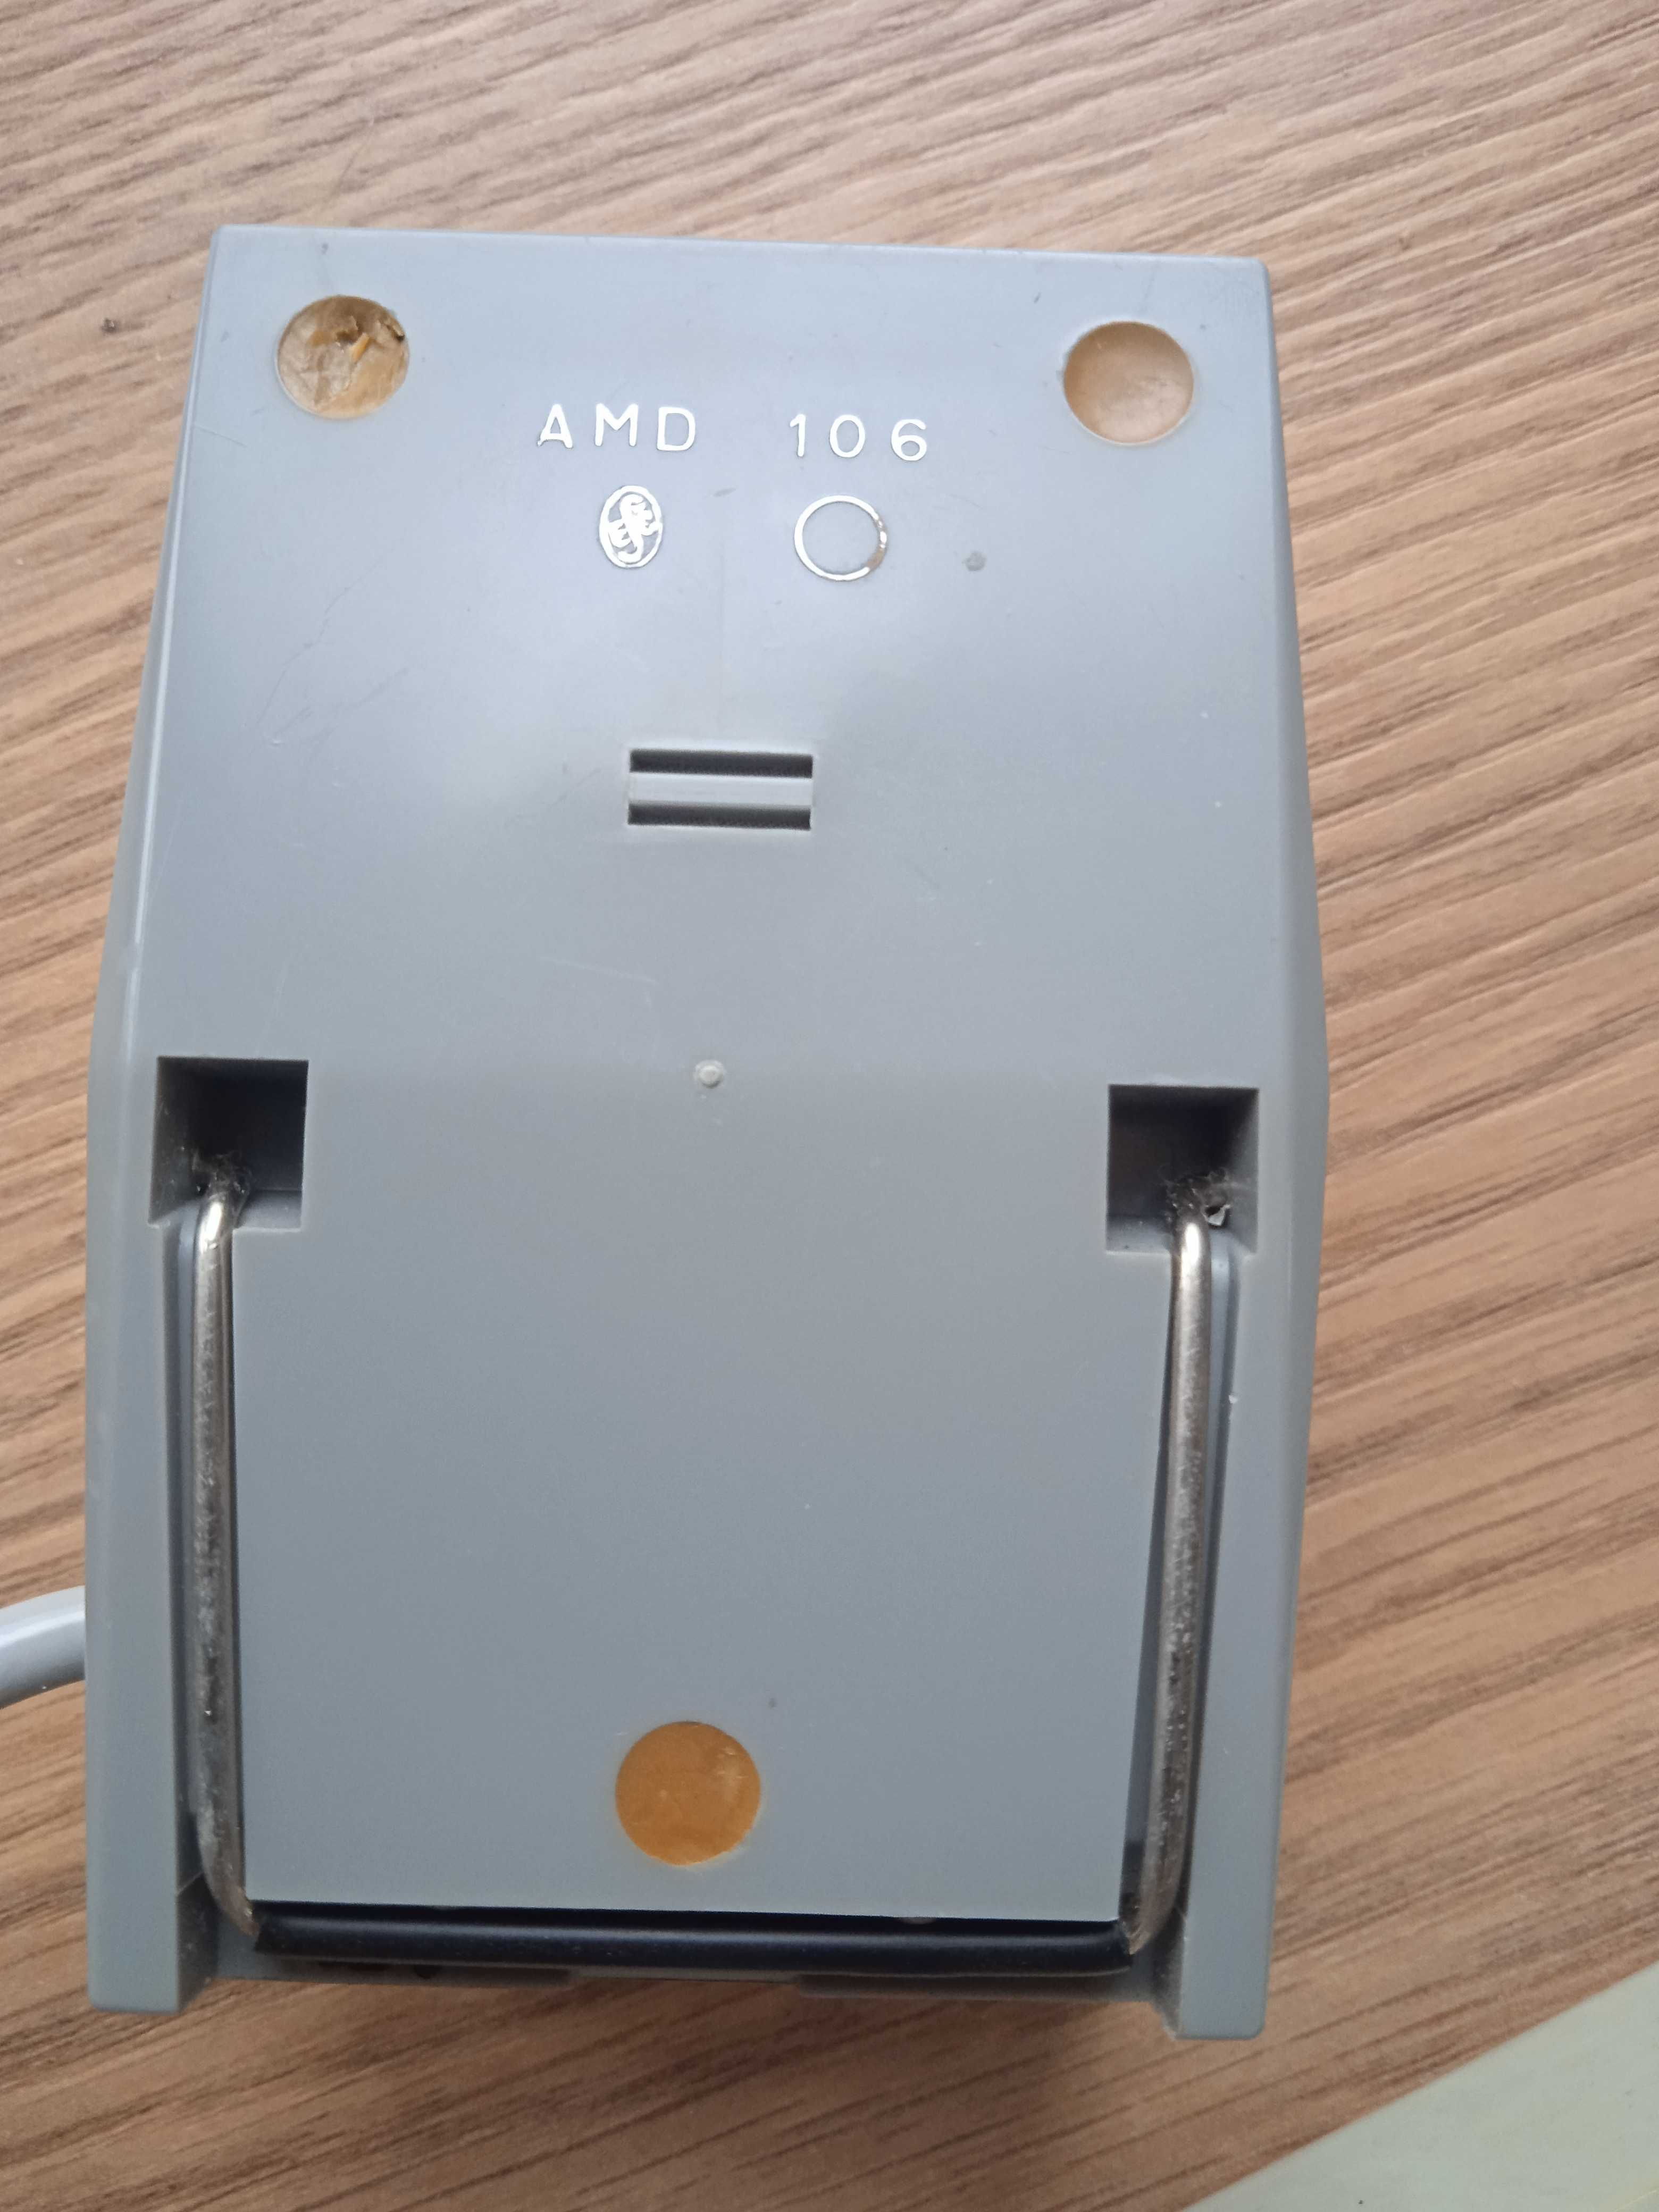 Mikrofon Tesla AMD-106 AMD 106